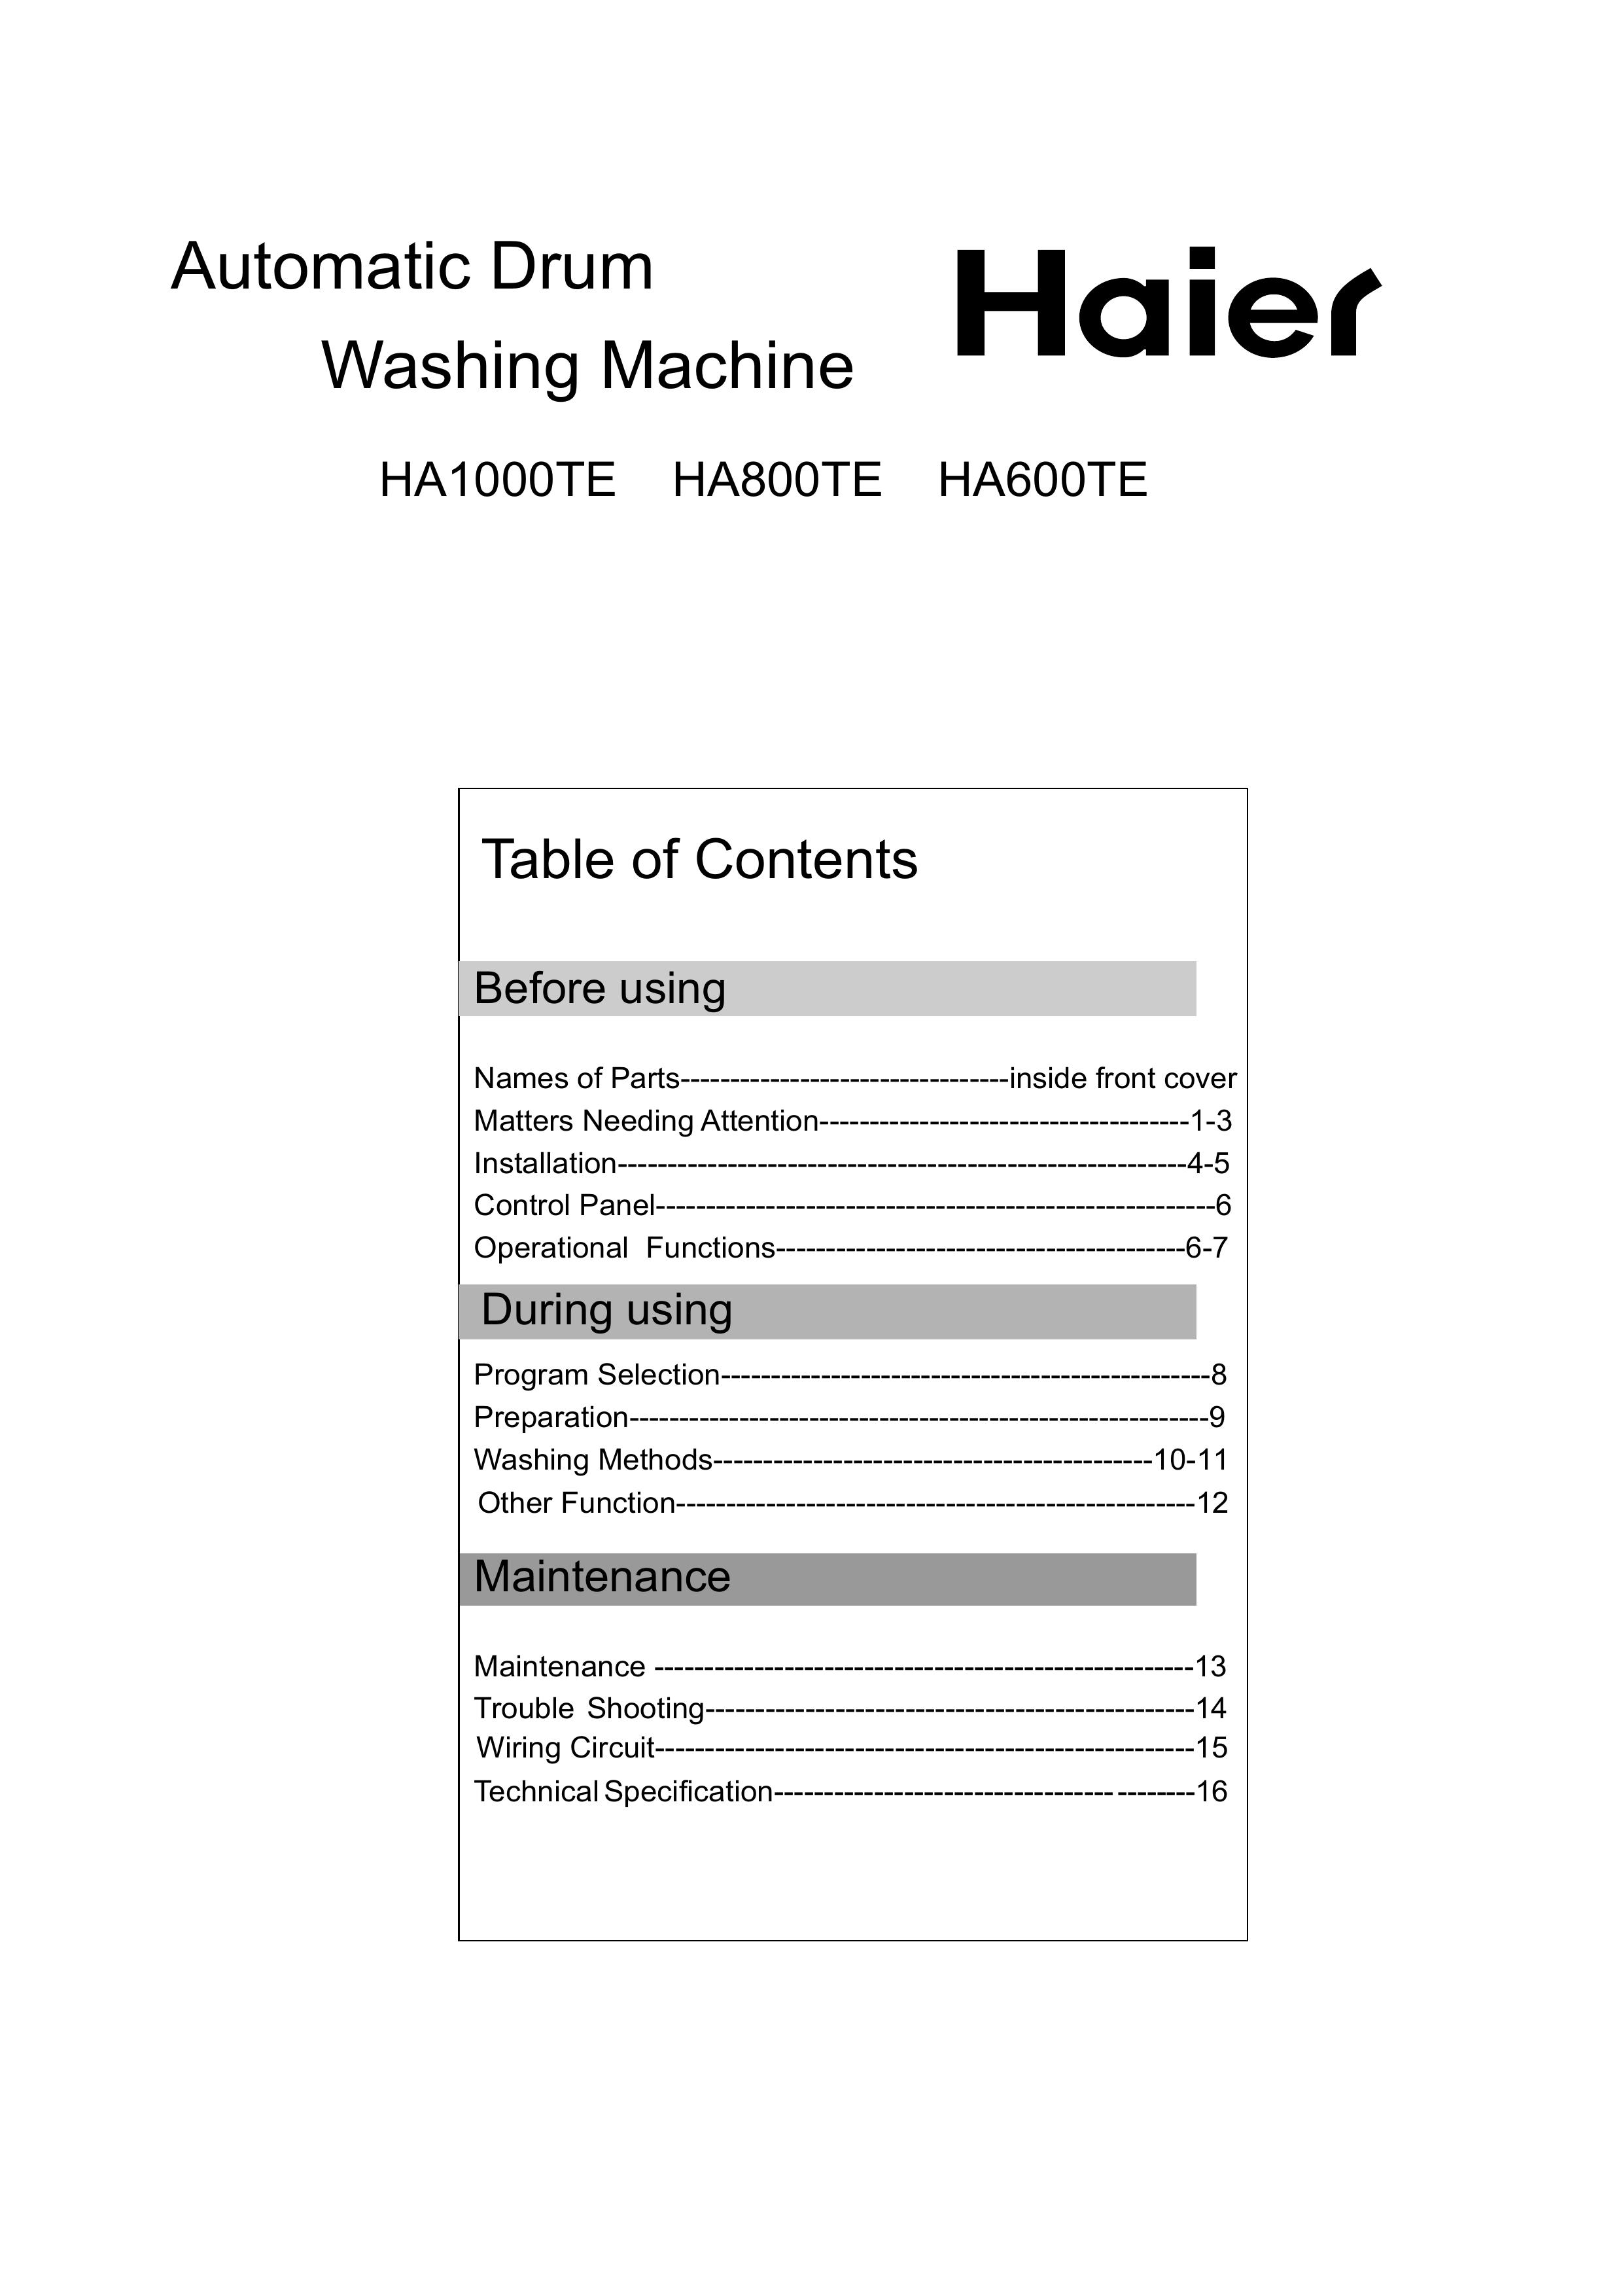 Haier HA1000TE Washer User Manual